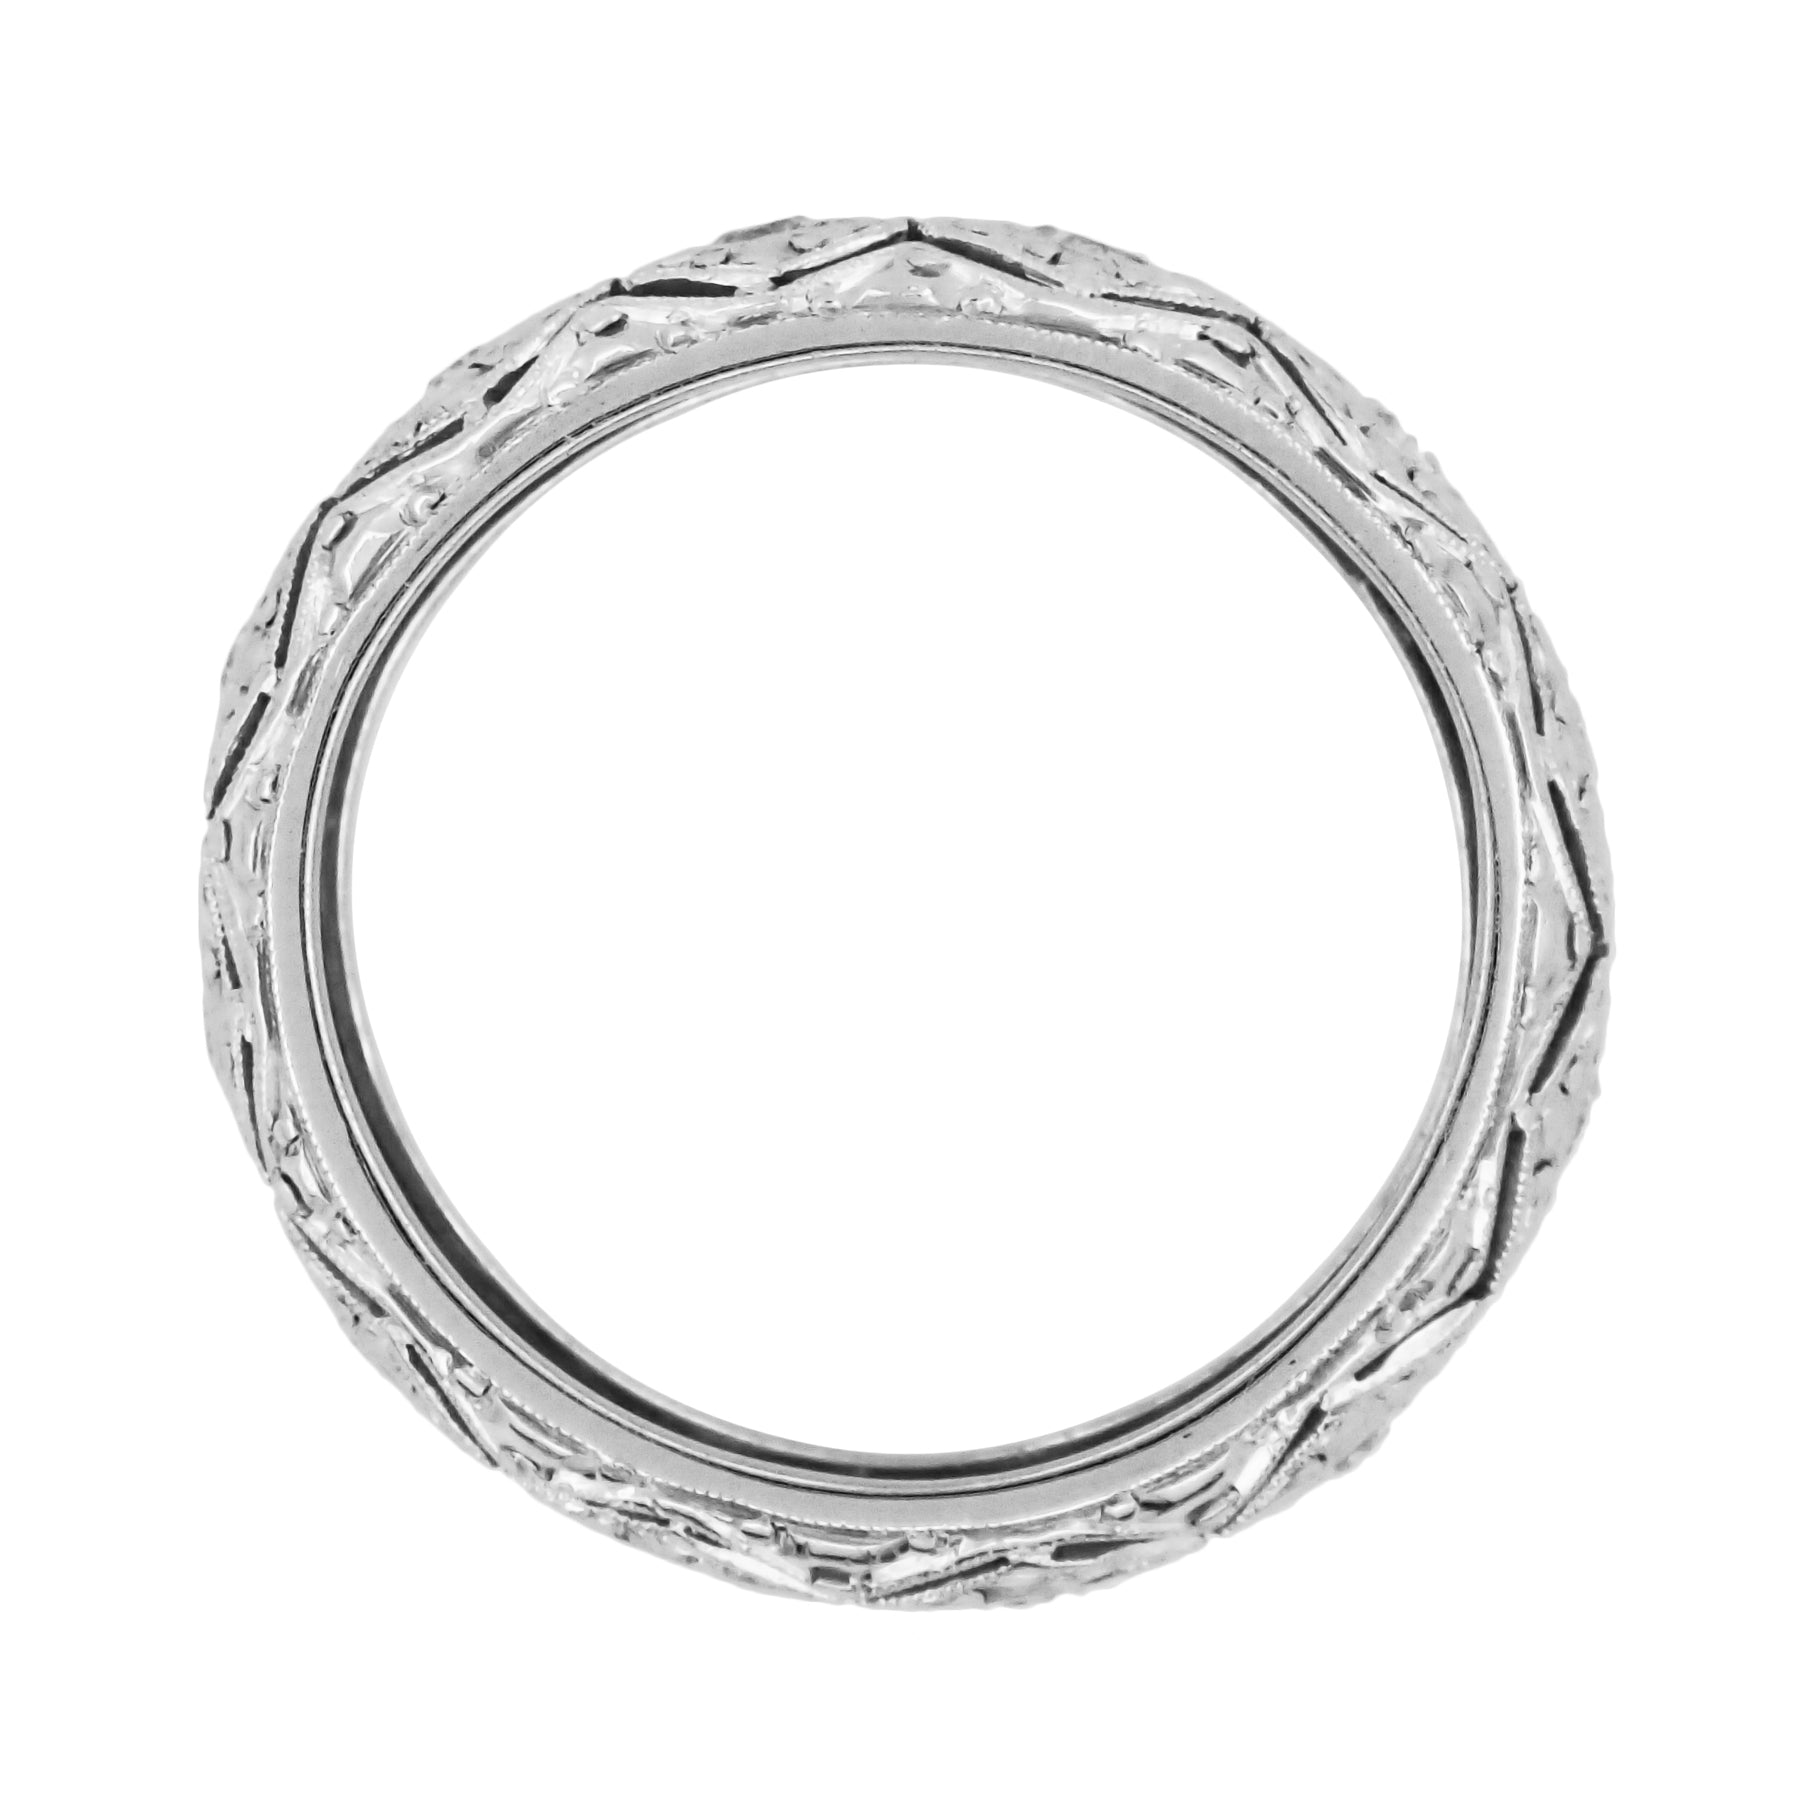 Ardsley Art Deco Honeycomb Filigree Engraved Antique Wide Diamond Wedding Ring in Platinum - Size 6.5 - Item: R1084 - Image: 2